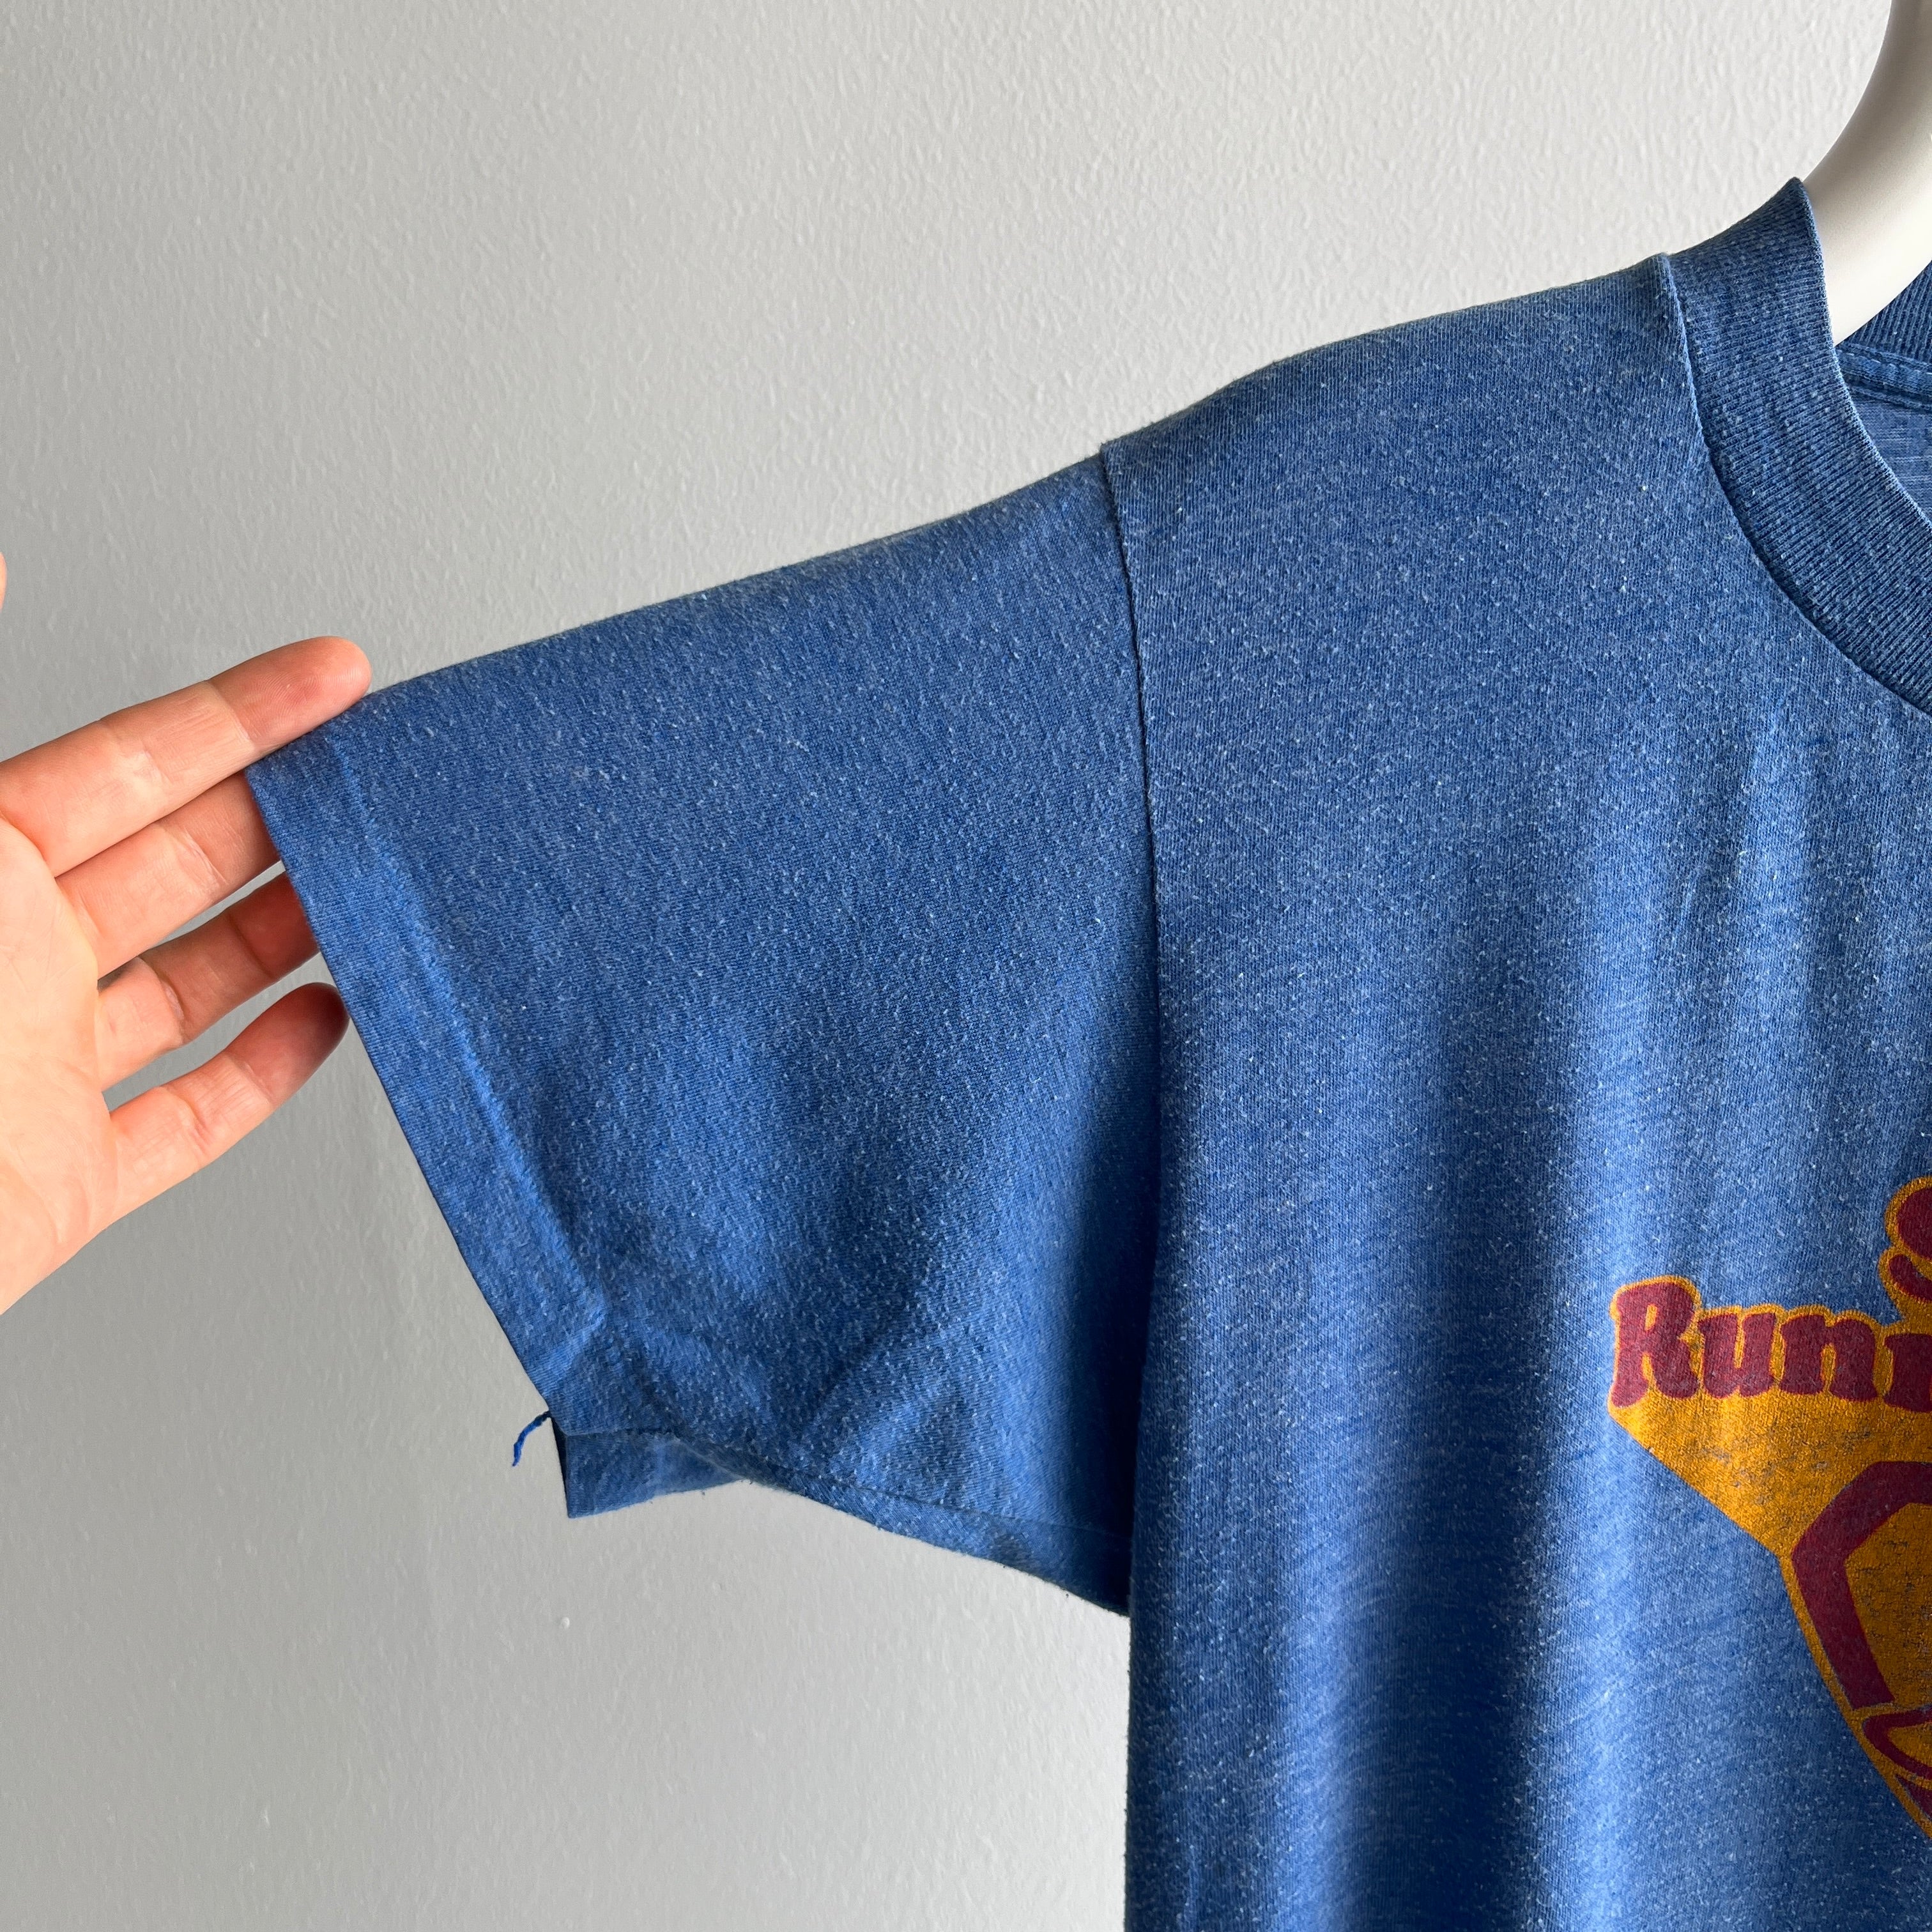 1980s Super Runner Shop Single Stitch T-Shirt